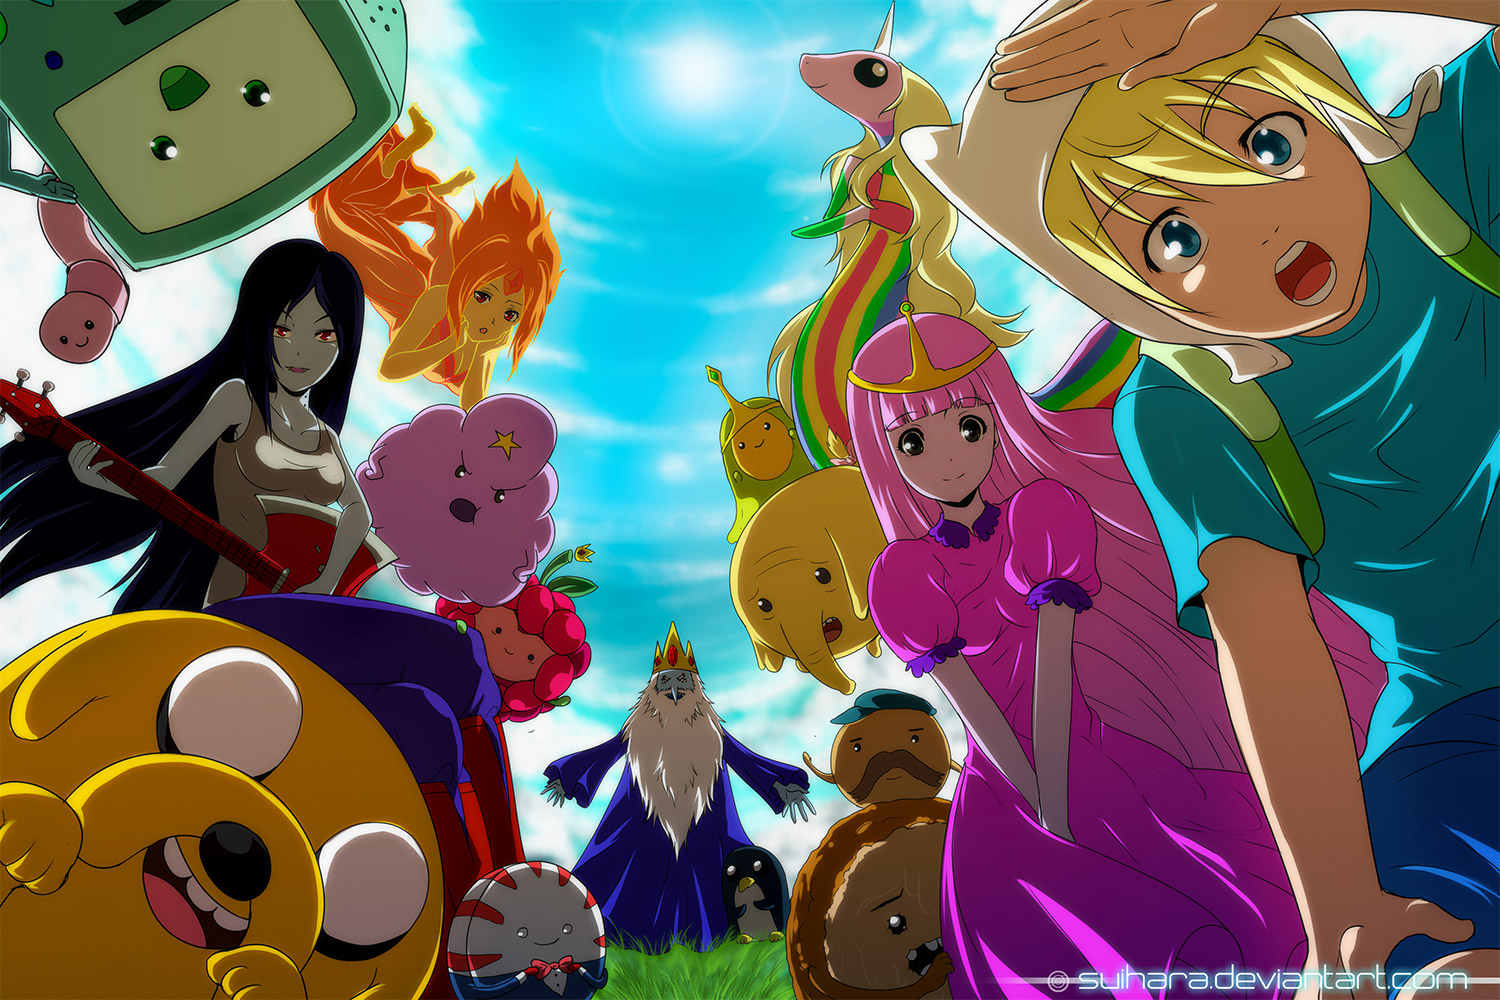 Anime Adventure Time Character Sketches by LoveMikuHatsune on DeviantArt